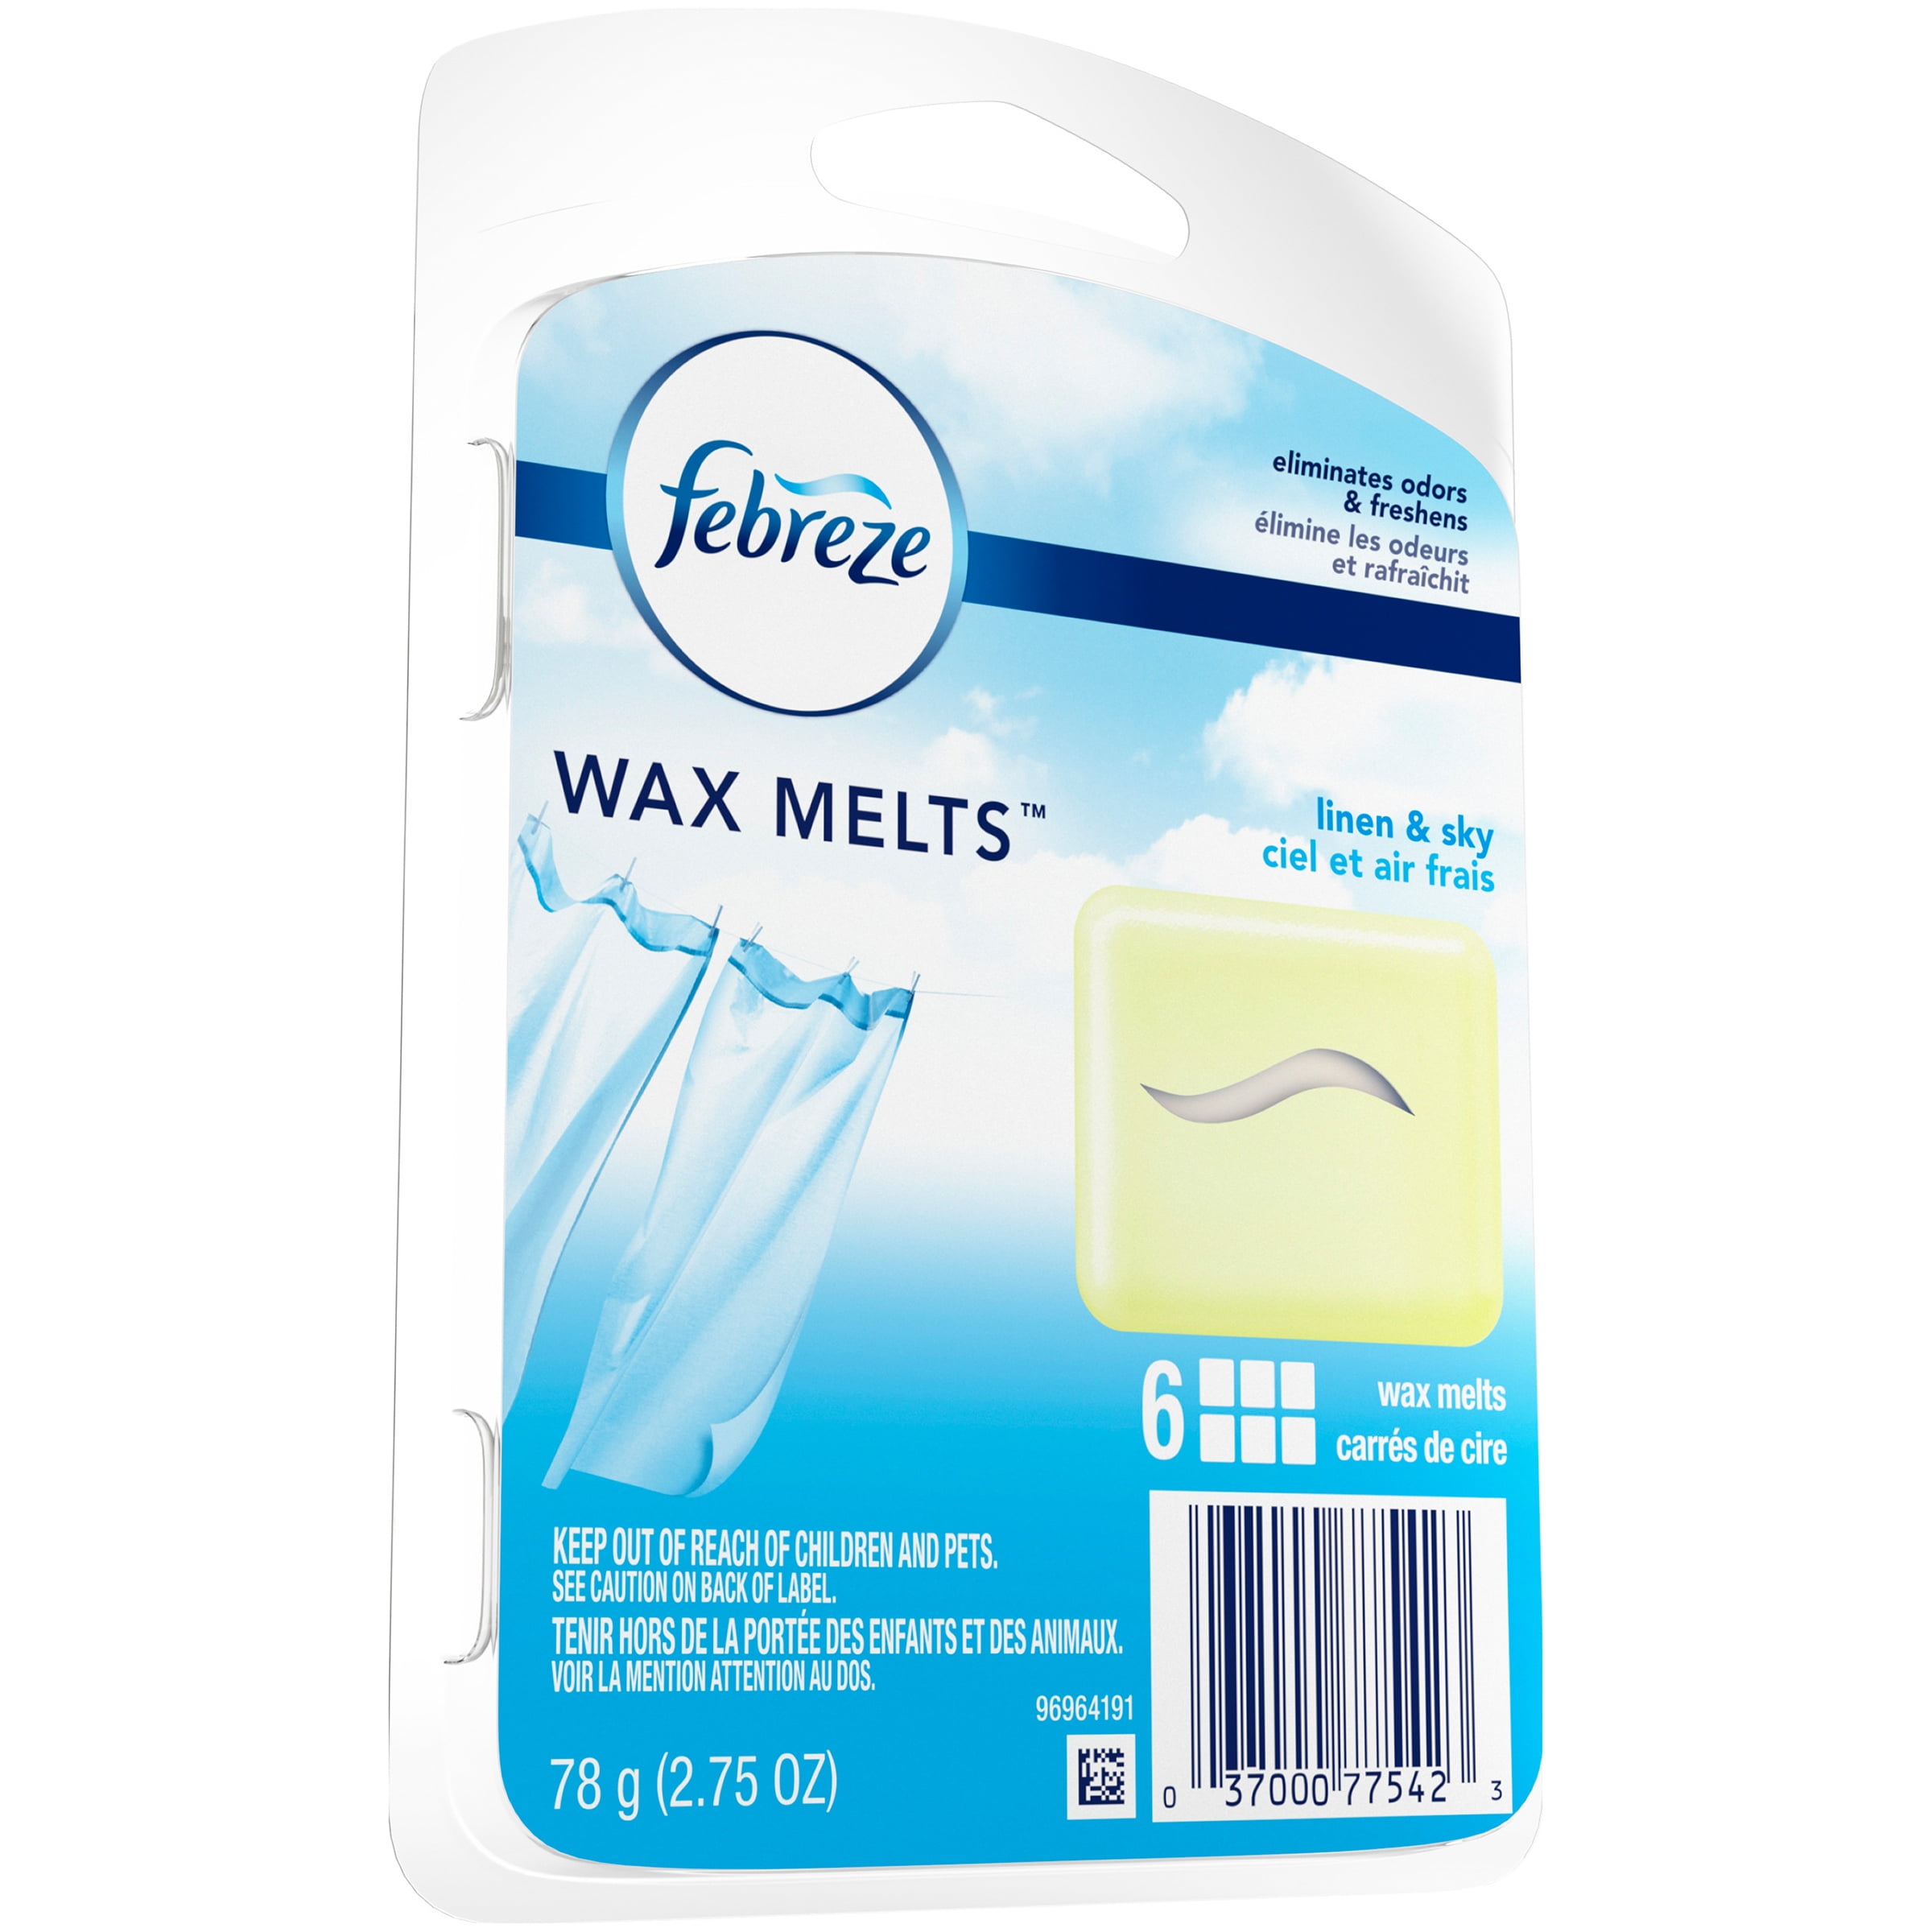 Febreze Wax Melts Air Freshener, Gain Original Scent (4 Packs, 6 Count –  SHANULKA Home Decor